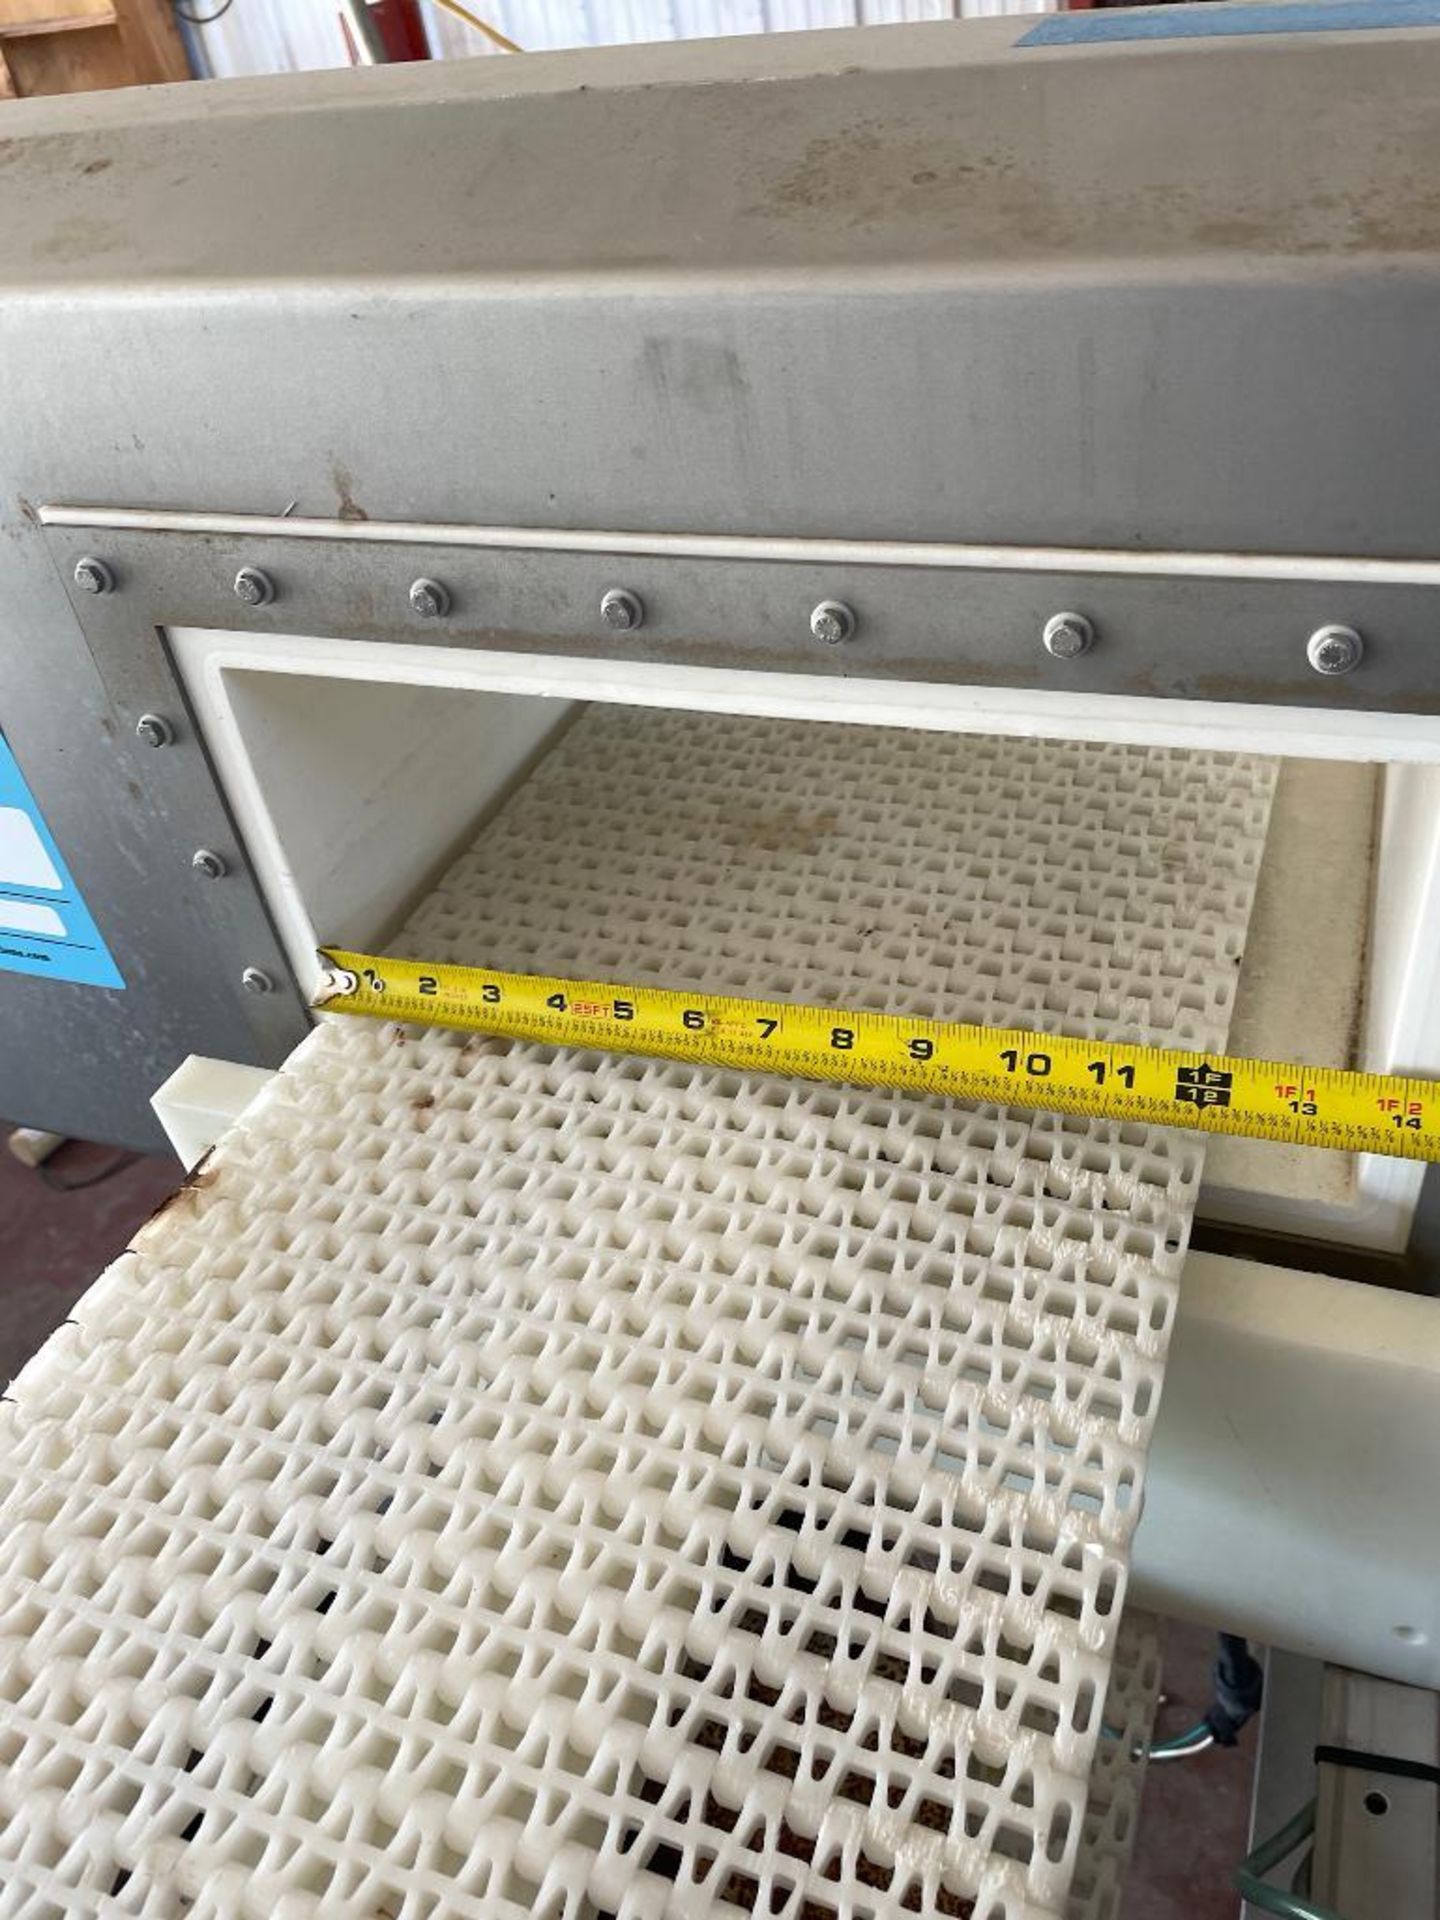 Safeline metal detector, 60” long belt, 14” W aperture, 6” height. - Image 3 of 5